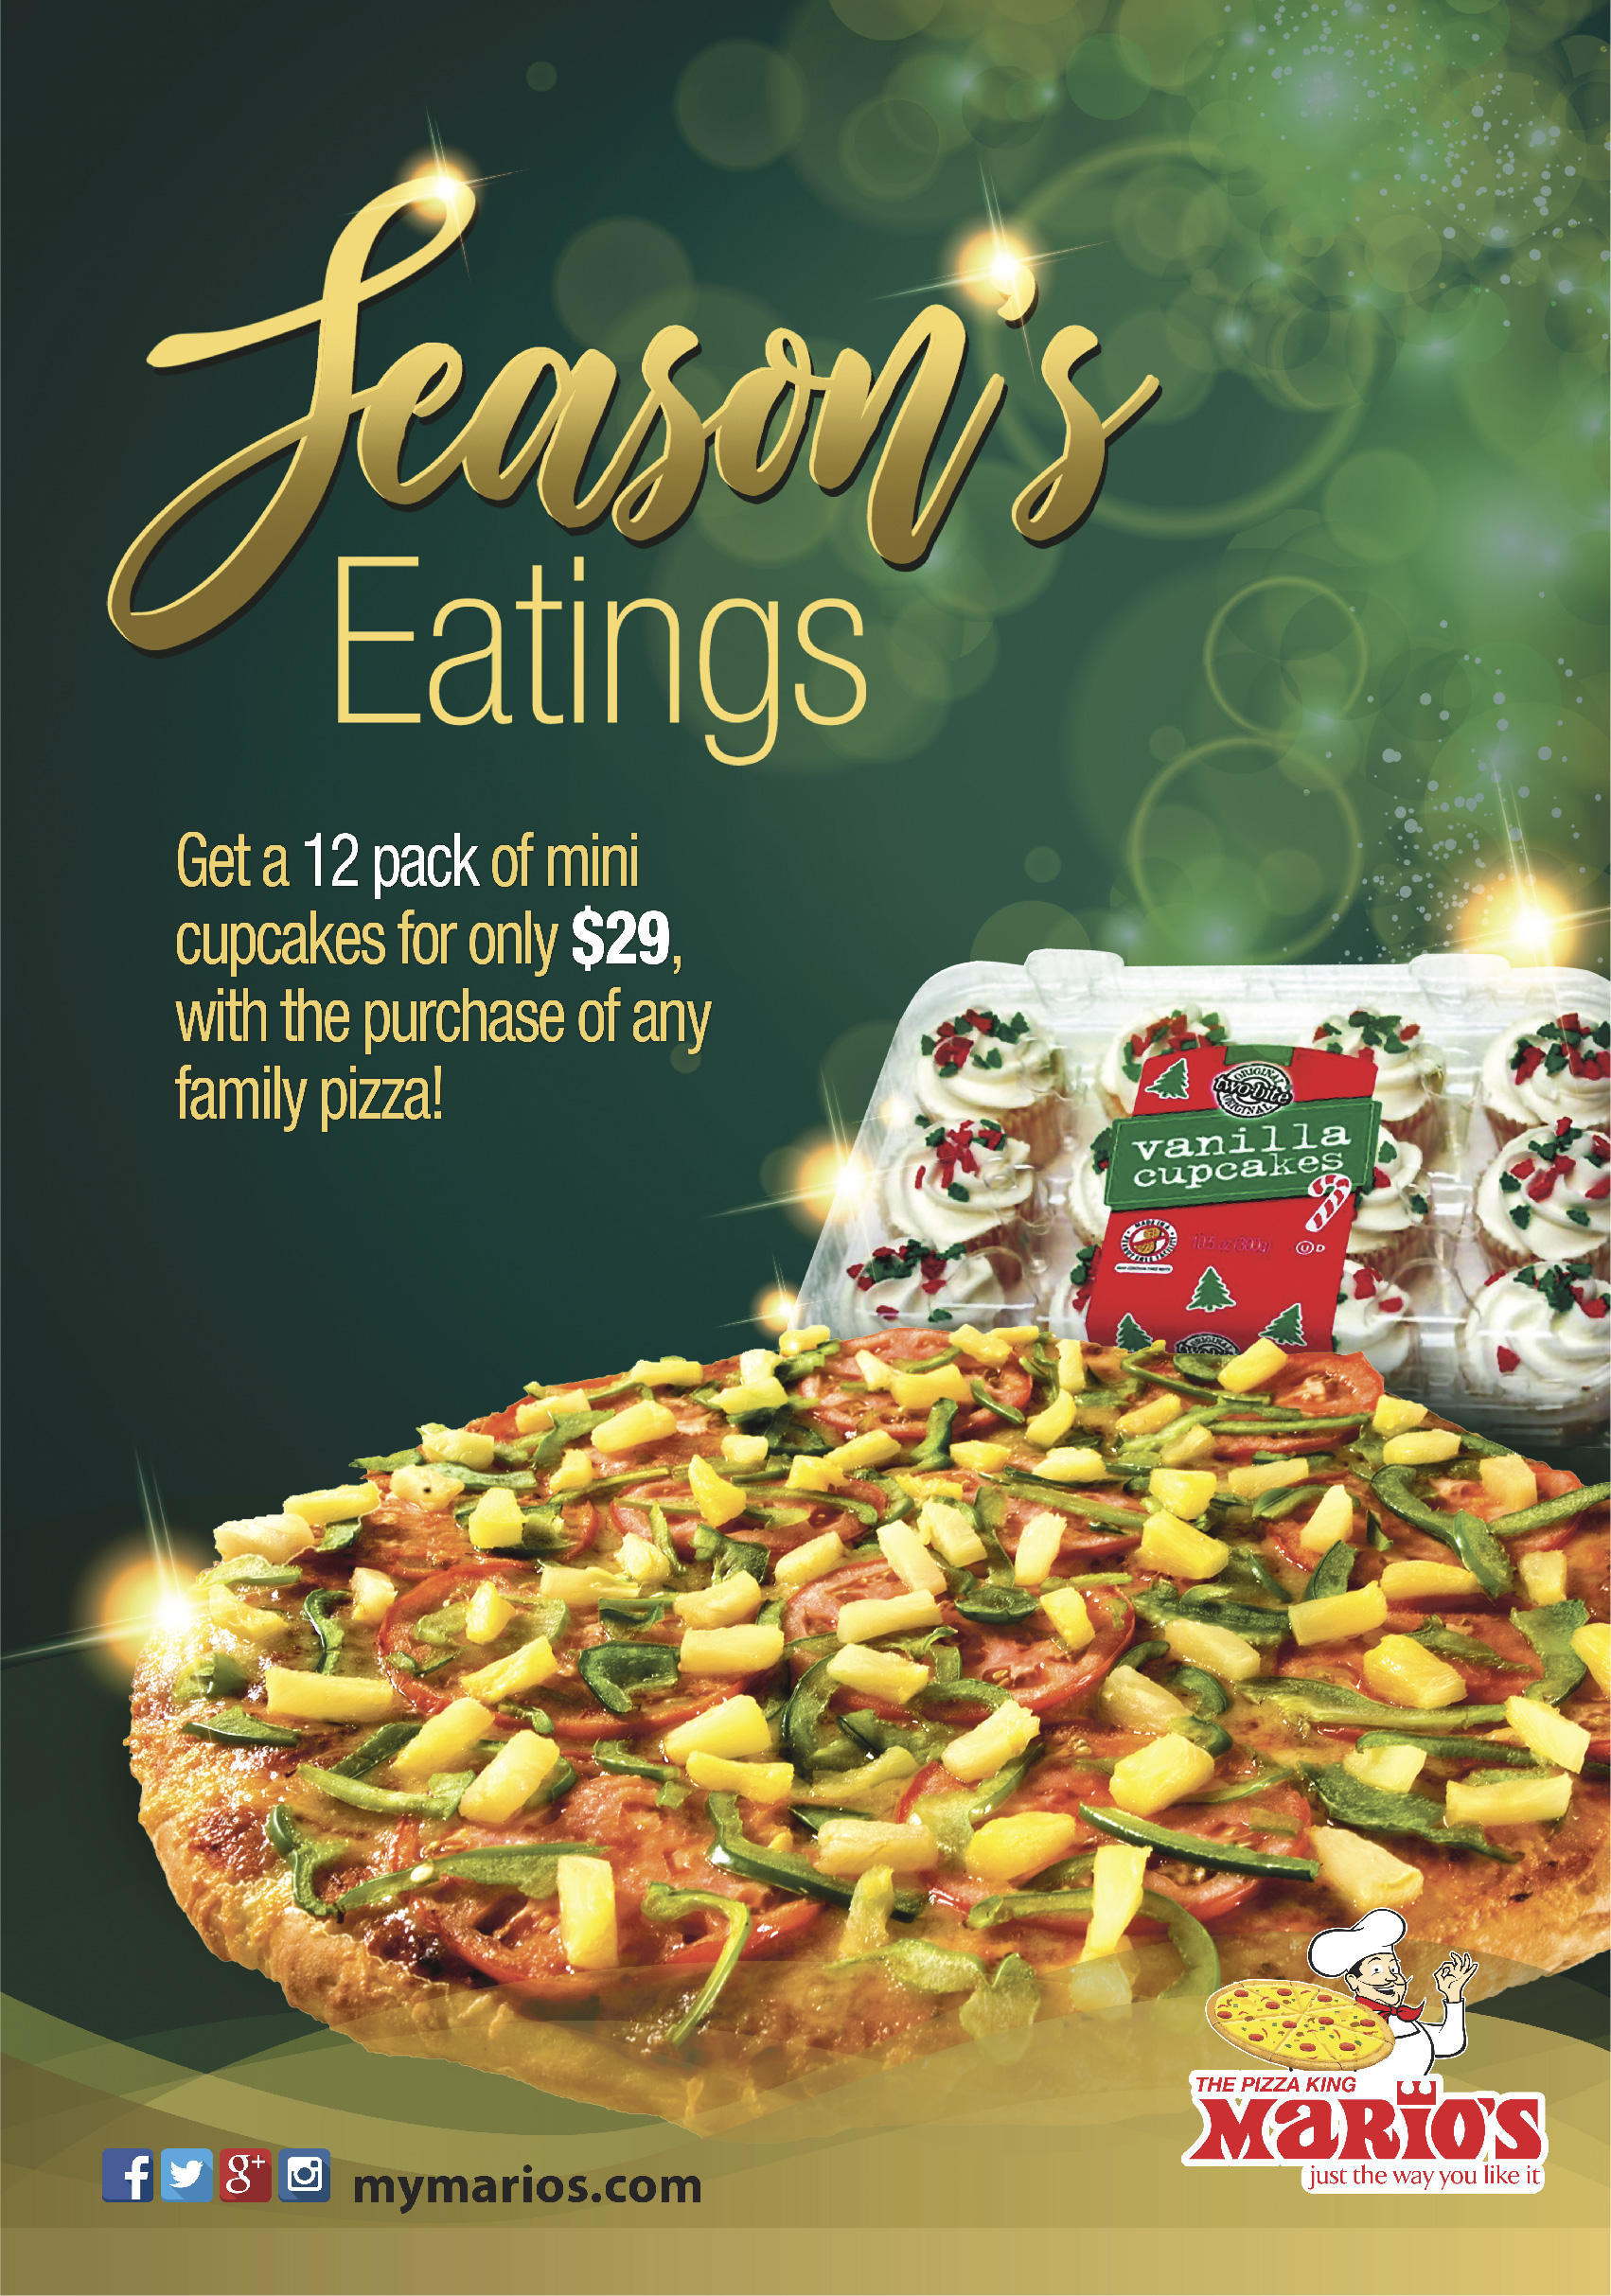 Mario's Pizza Season's Eatings Pepper Advertising